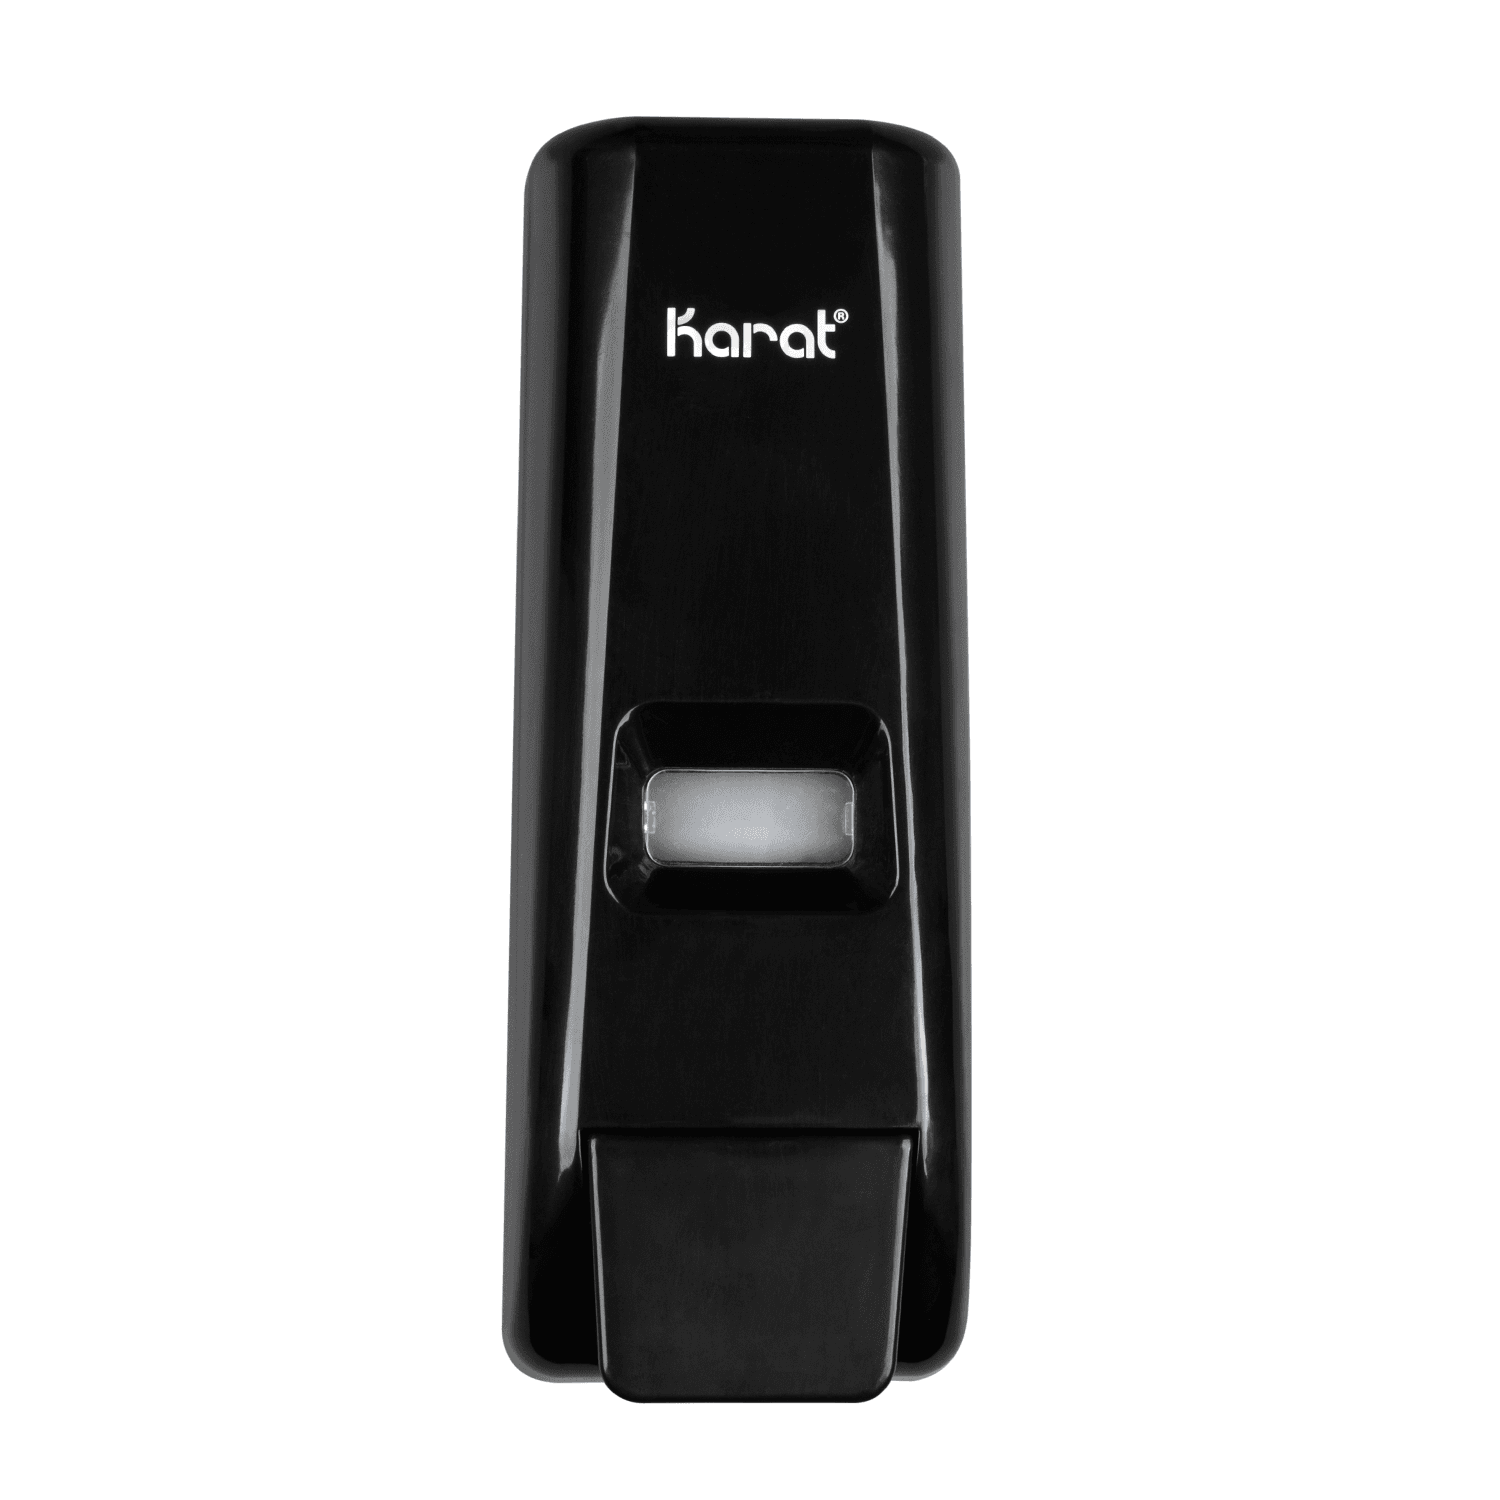 Karat 13.5oz Hand Soap Refillable Liquid Dispenser, Stand/Wall Mount, Black - 1 unit